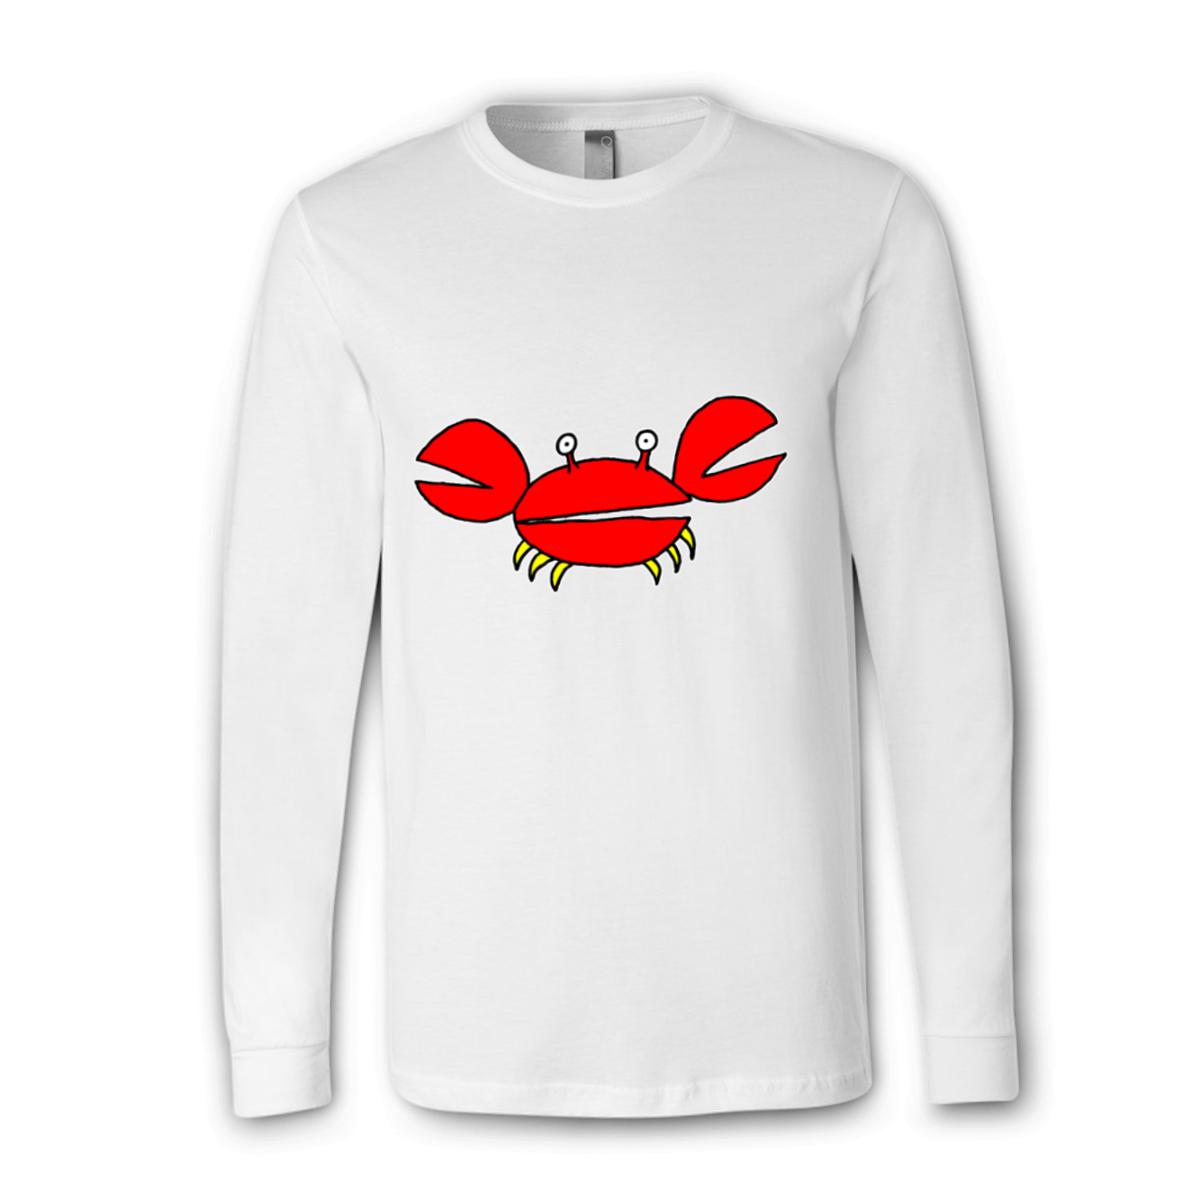 Crab Unisex Long Sleeve Tee Small white